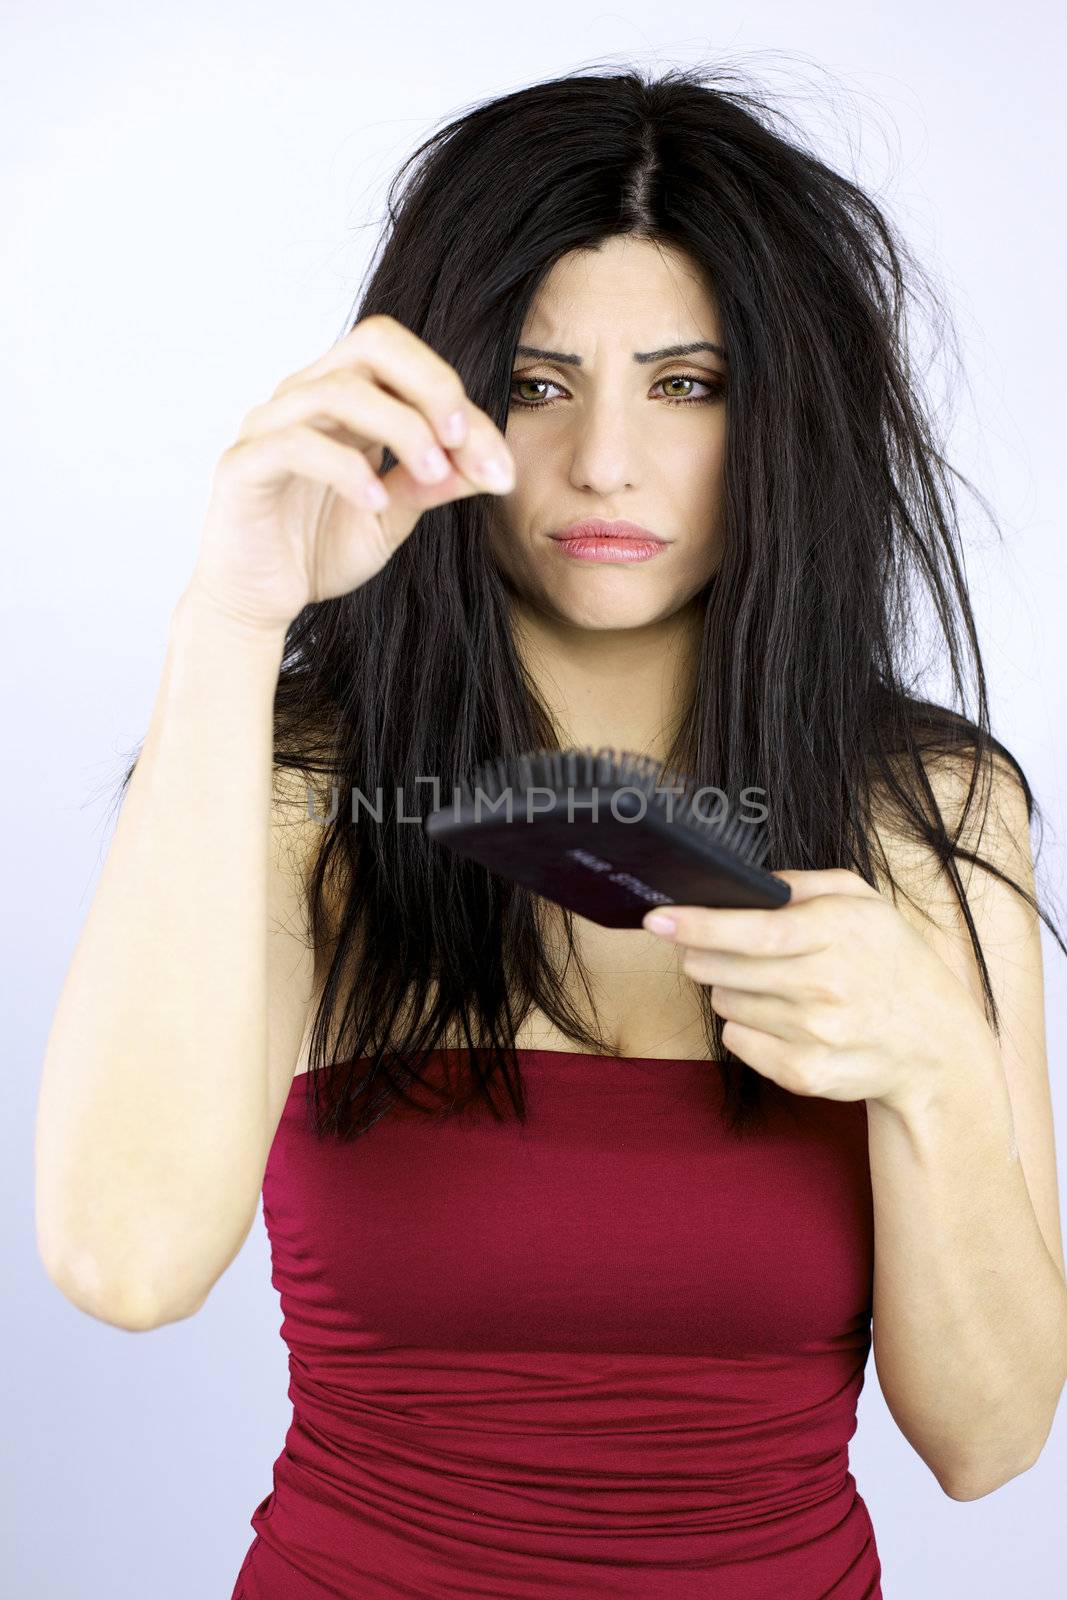 Sad woman holding fallen hair healthcare problems by fmarsicano